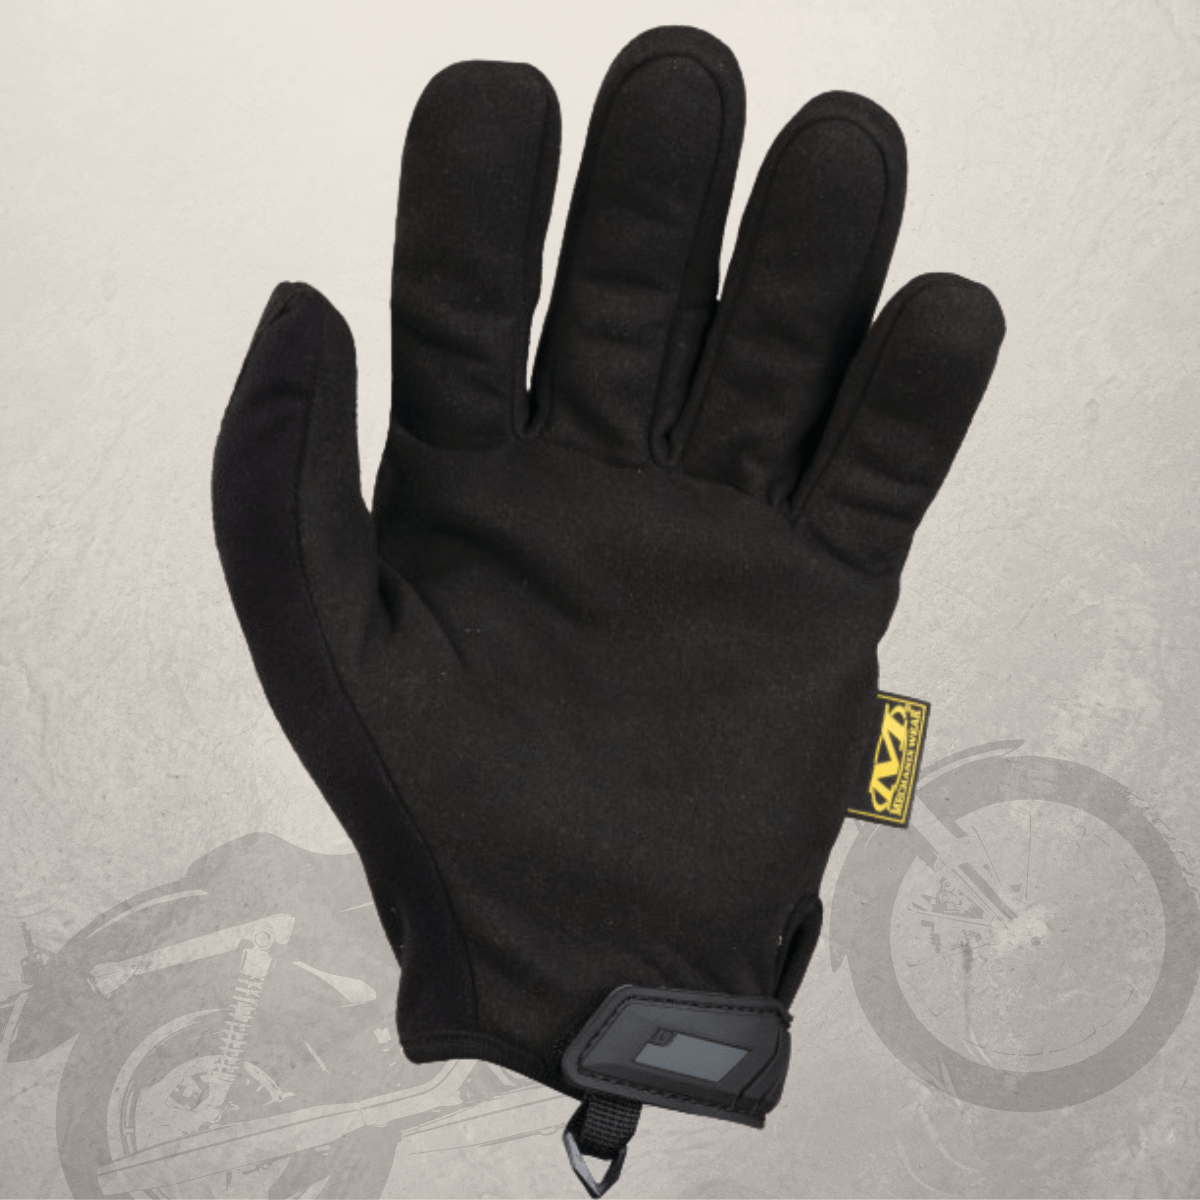 Mechanixwear The Original® Insulated Work Glove